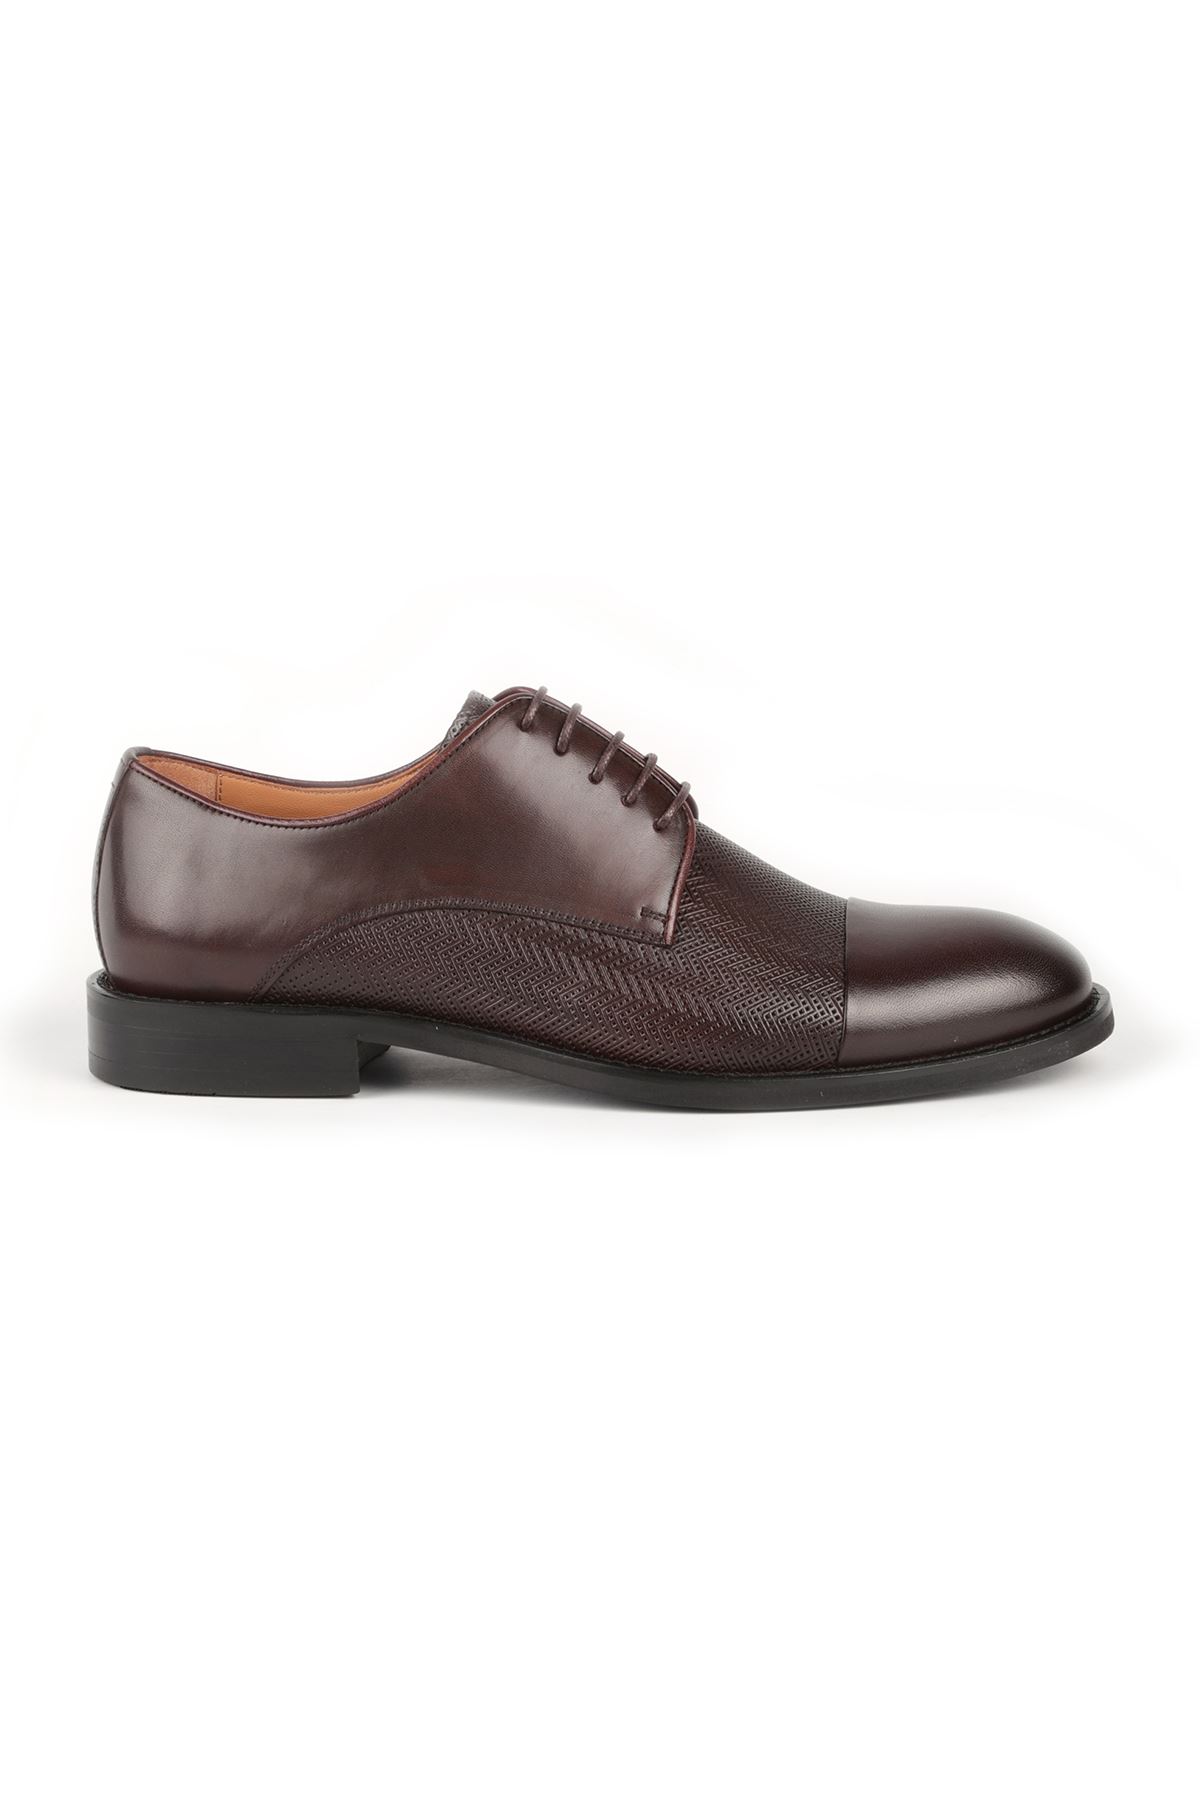 Libero L3559 Brown Classic Shoes